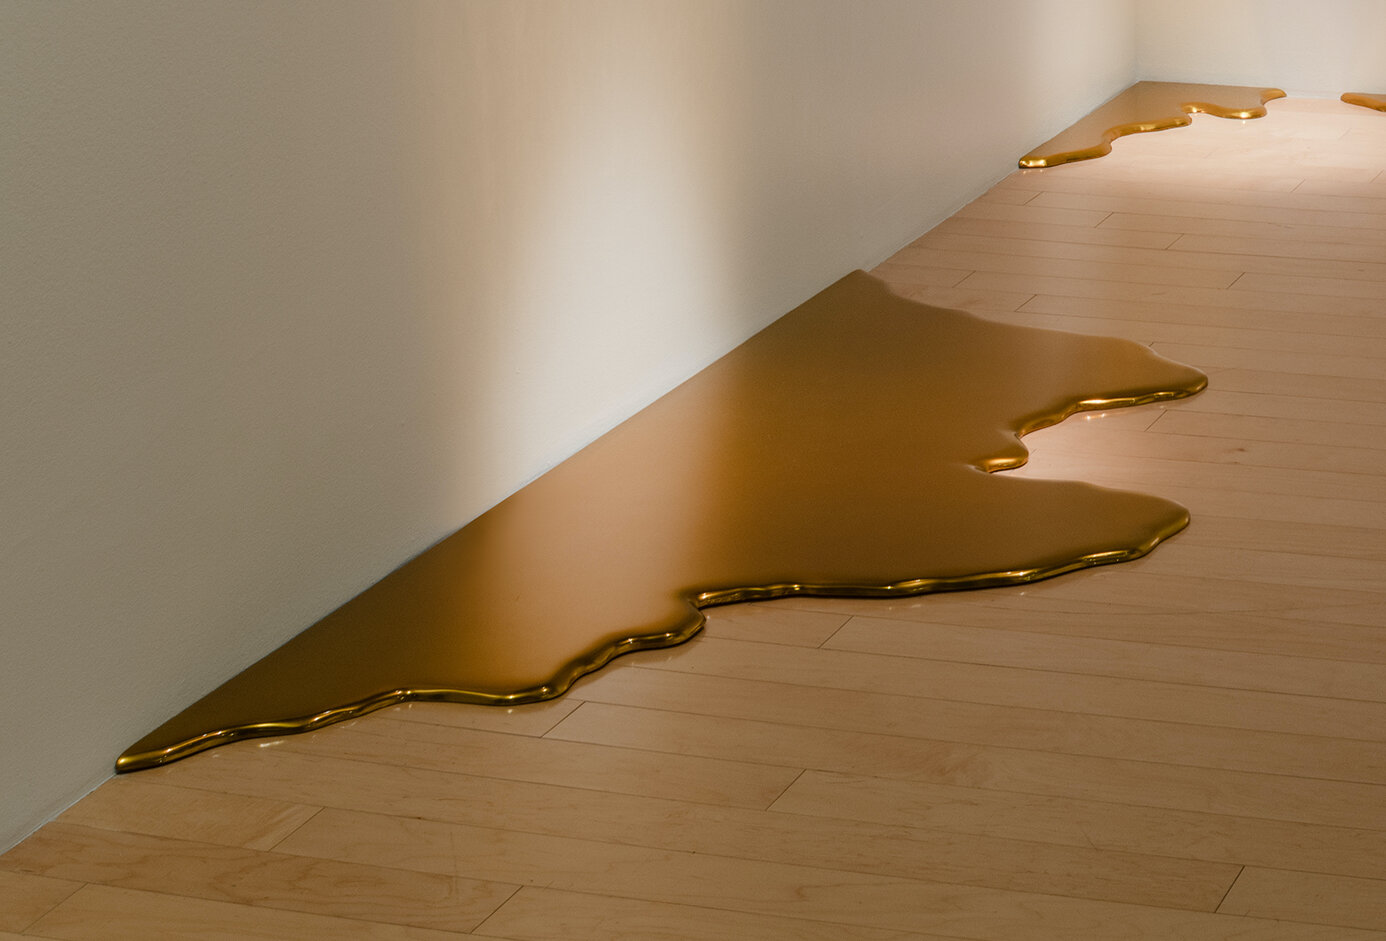  Karen Lofgren  Gold Flood , 2009 automotive paint on wood 3/4 x 96 x 40 in (1.9 x 243.8 x 101.6 cm) 